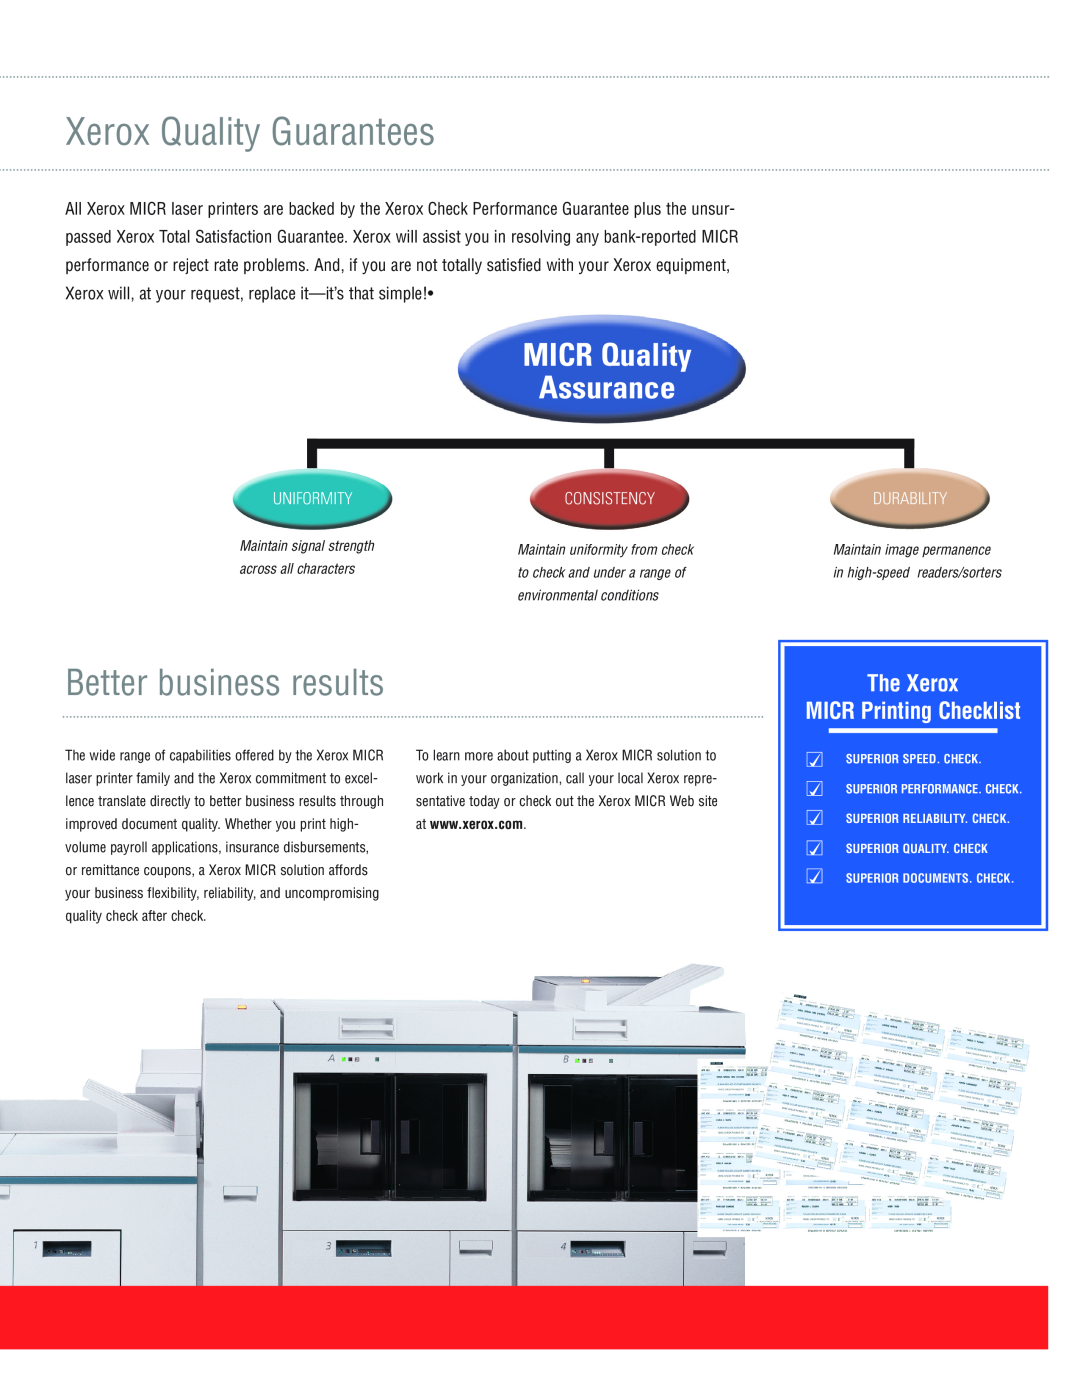 Xerox Xerox Quality Guarantees, Better business results, MICR Quality Assurance, The Xerox MICR Printing Checklist 